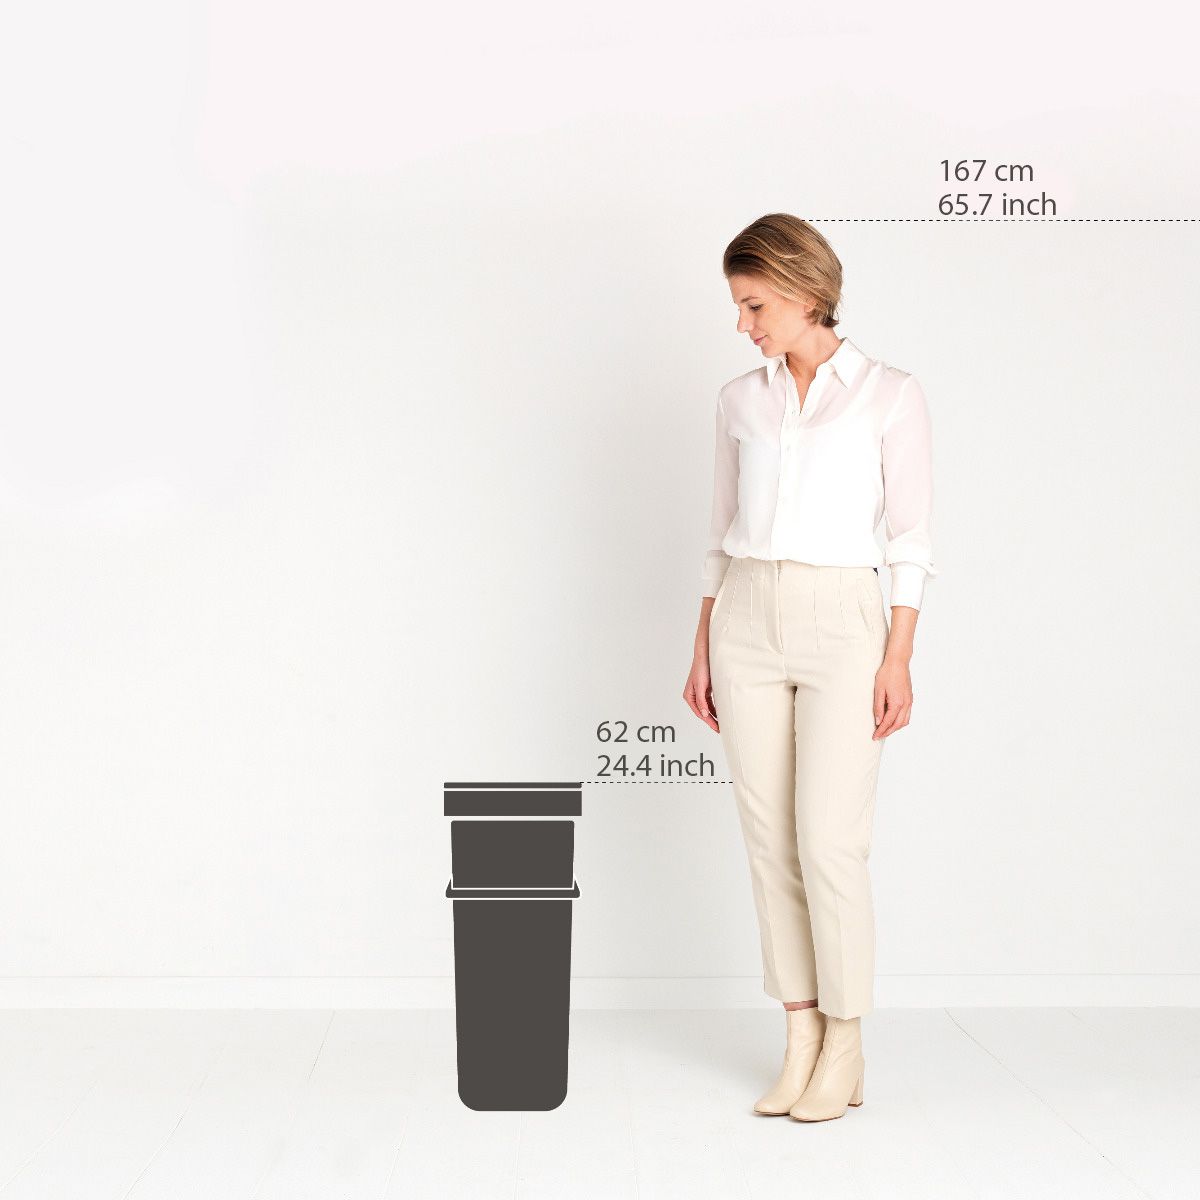 Sort & Go Recycle Trash Can 10.6 gallon (40L)  - Jade Green